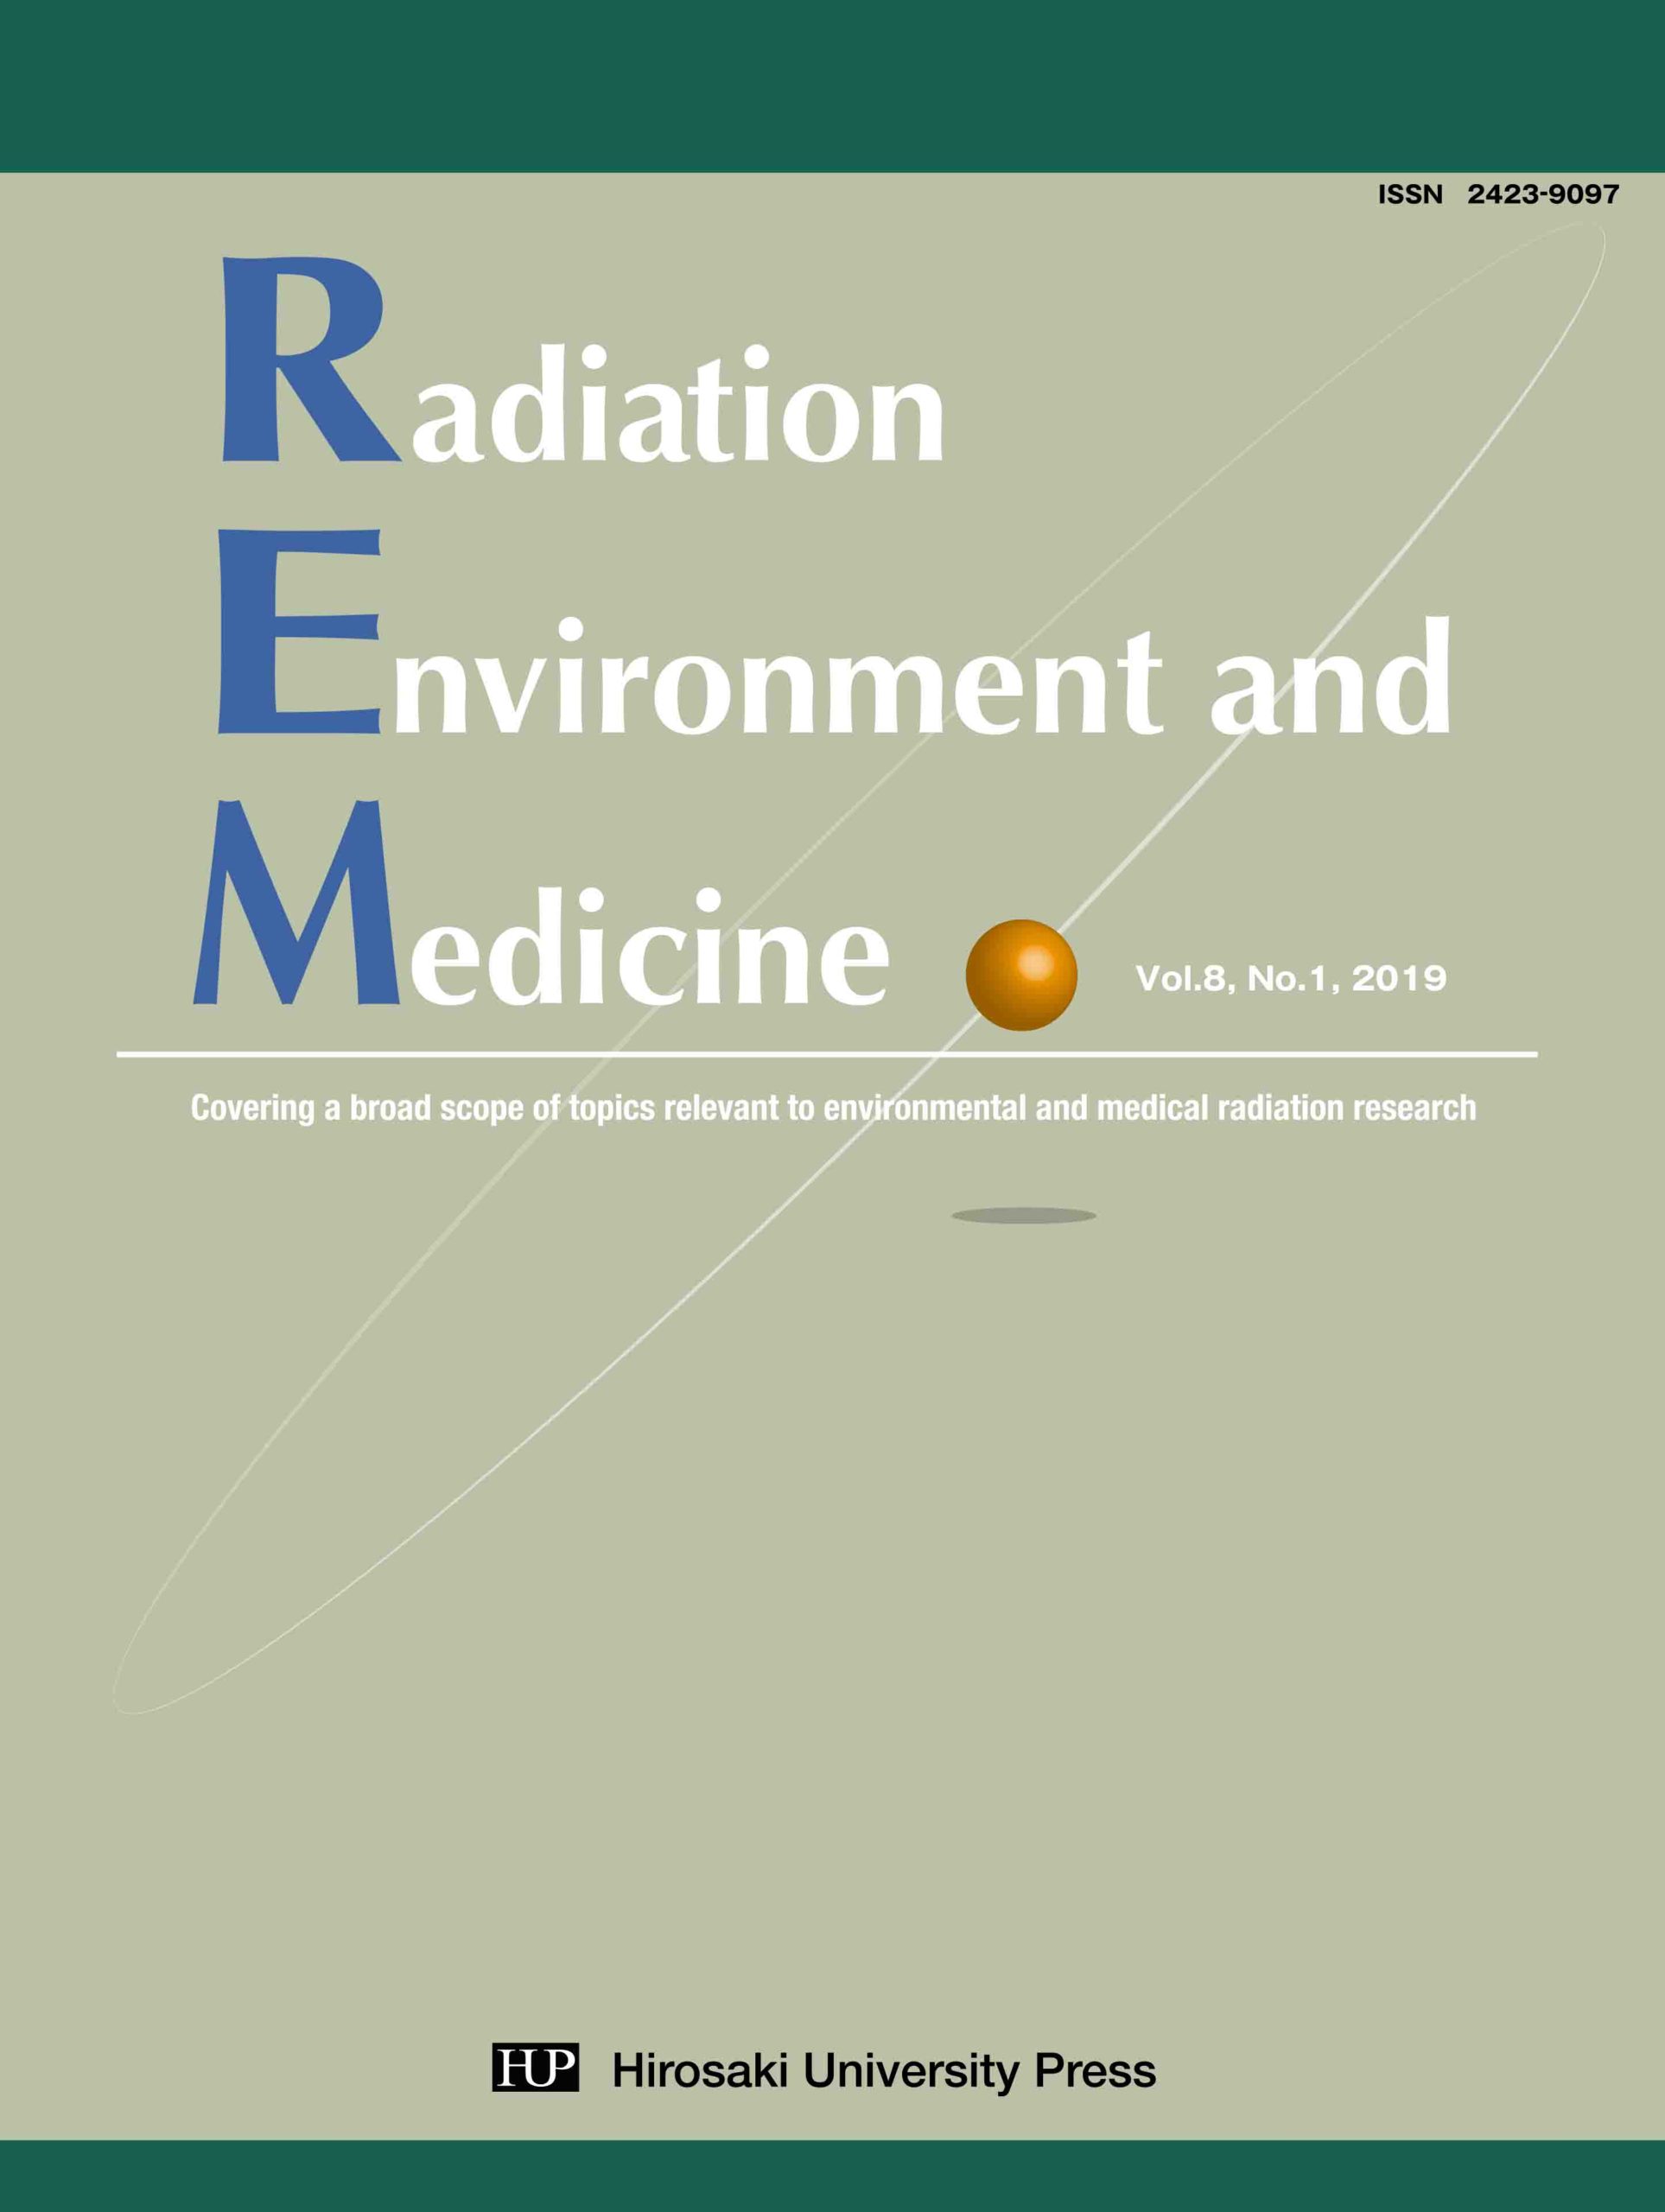 Radiation Environment and Medicine Vol.8, No.1 cover